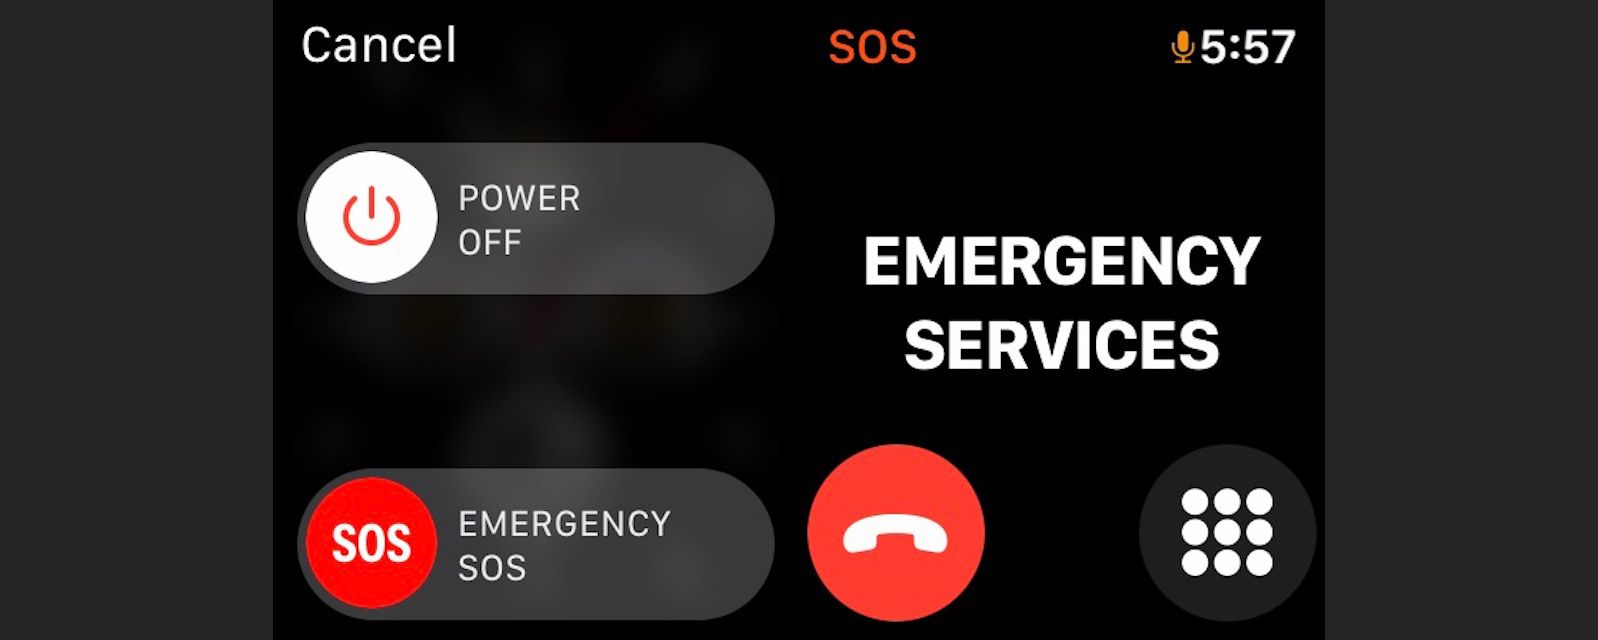 Apple Watch телефонує до служби екстреної допомоги